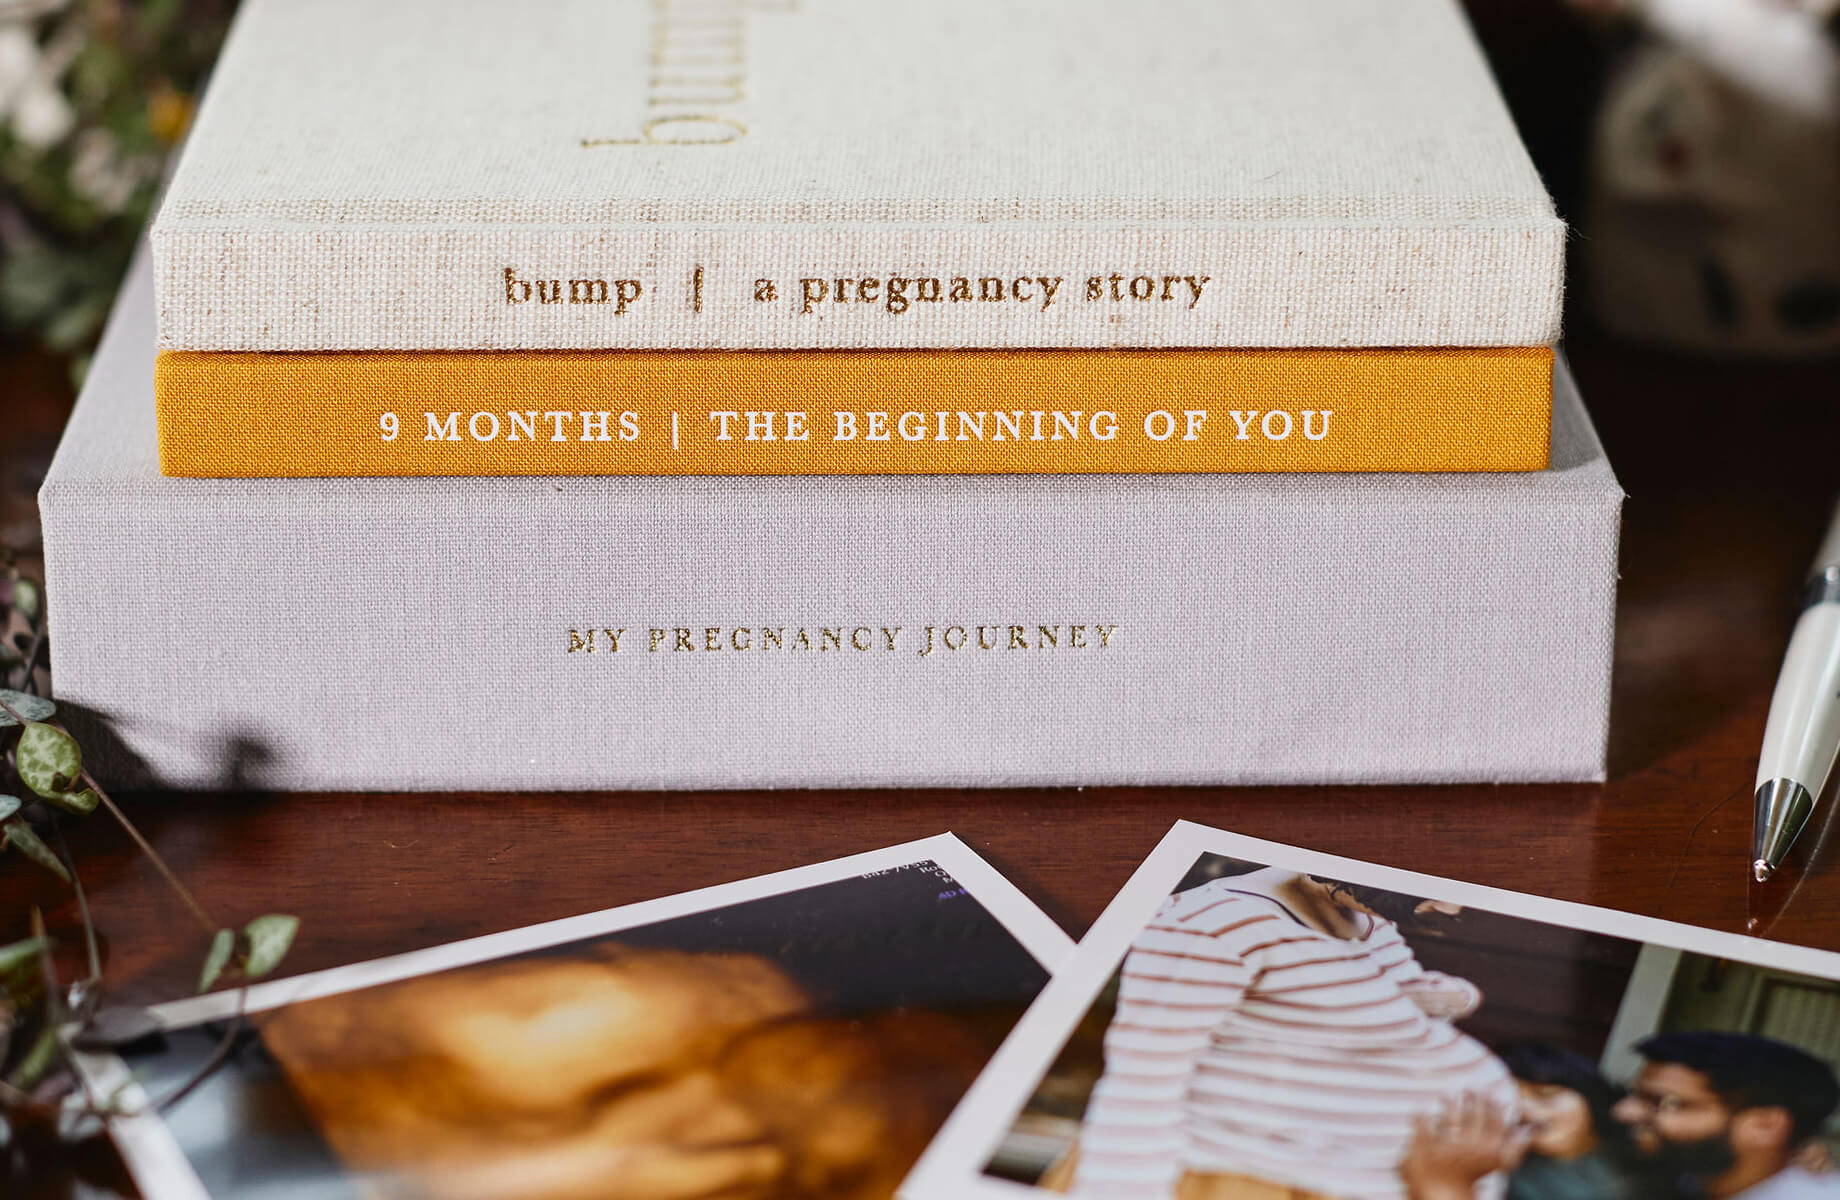 CHOOSING A PREGNANCY JOURNAL